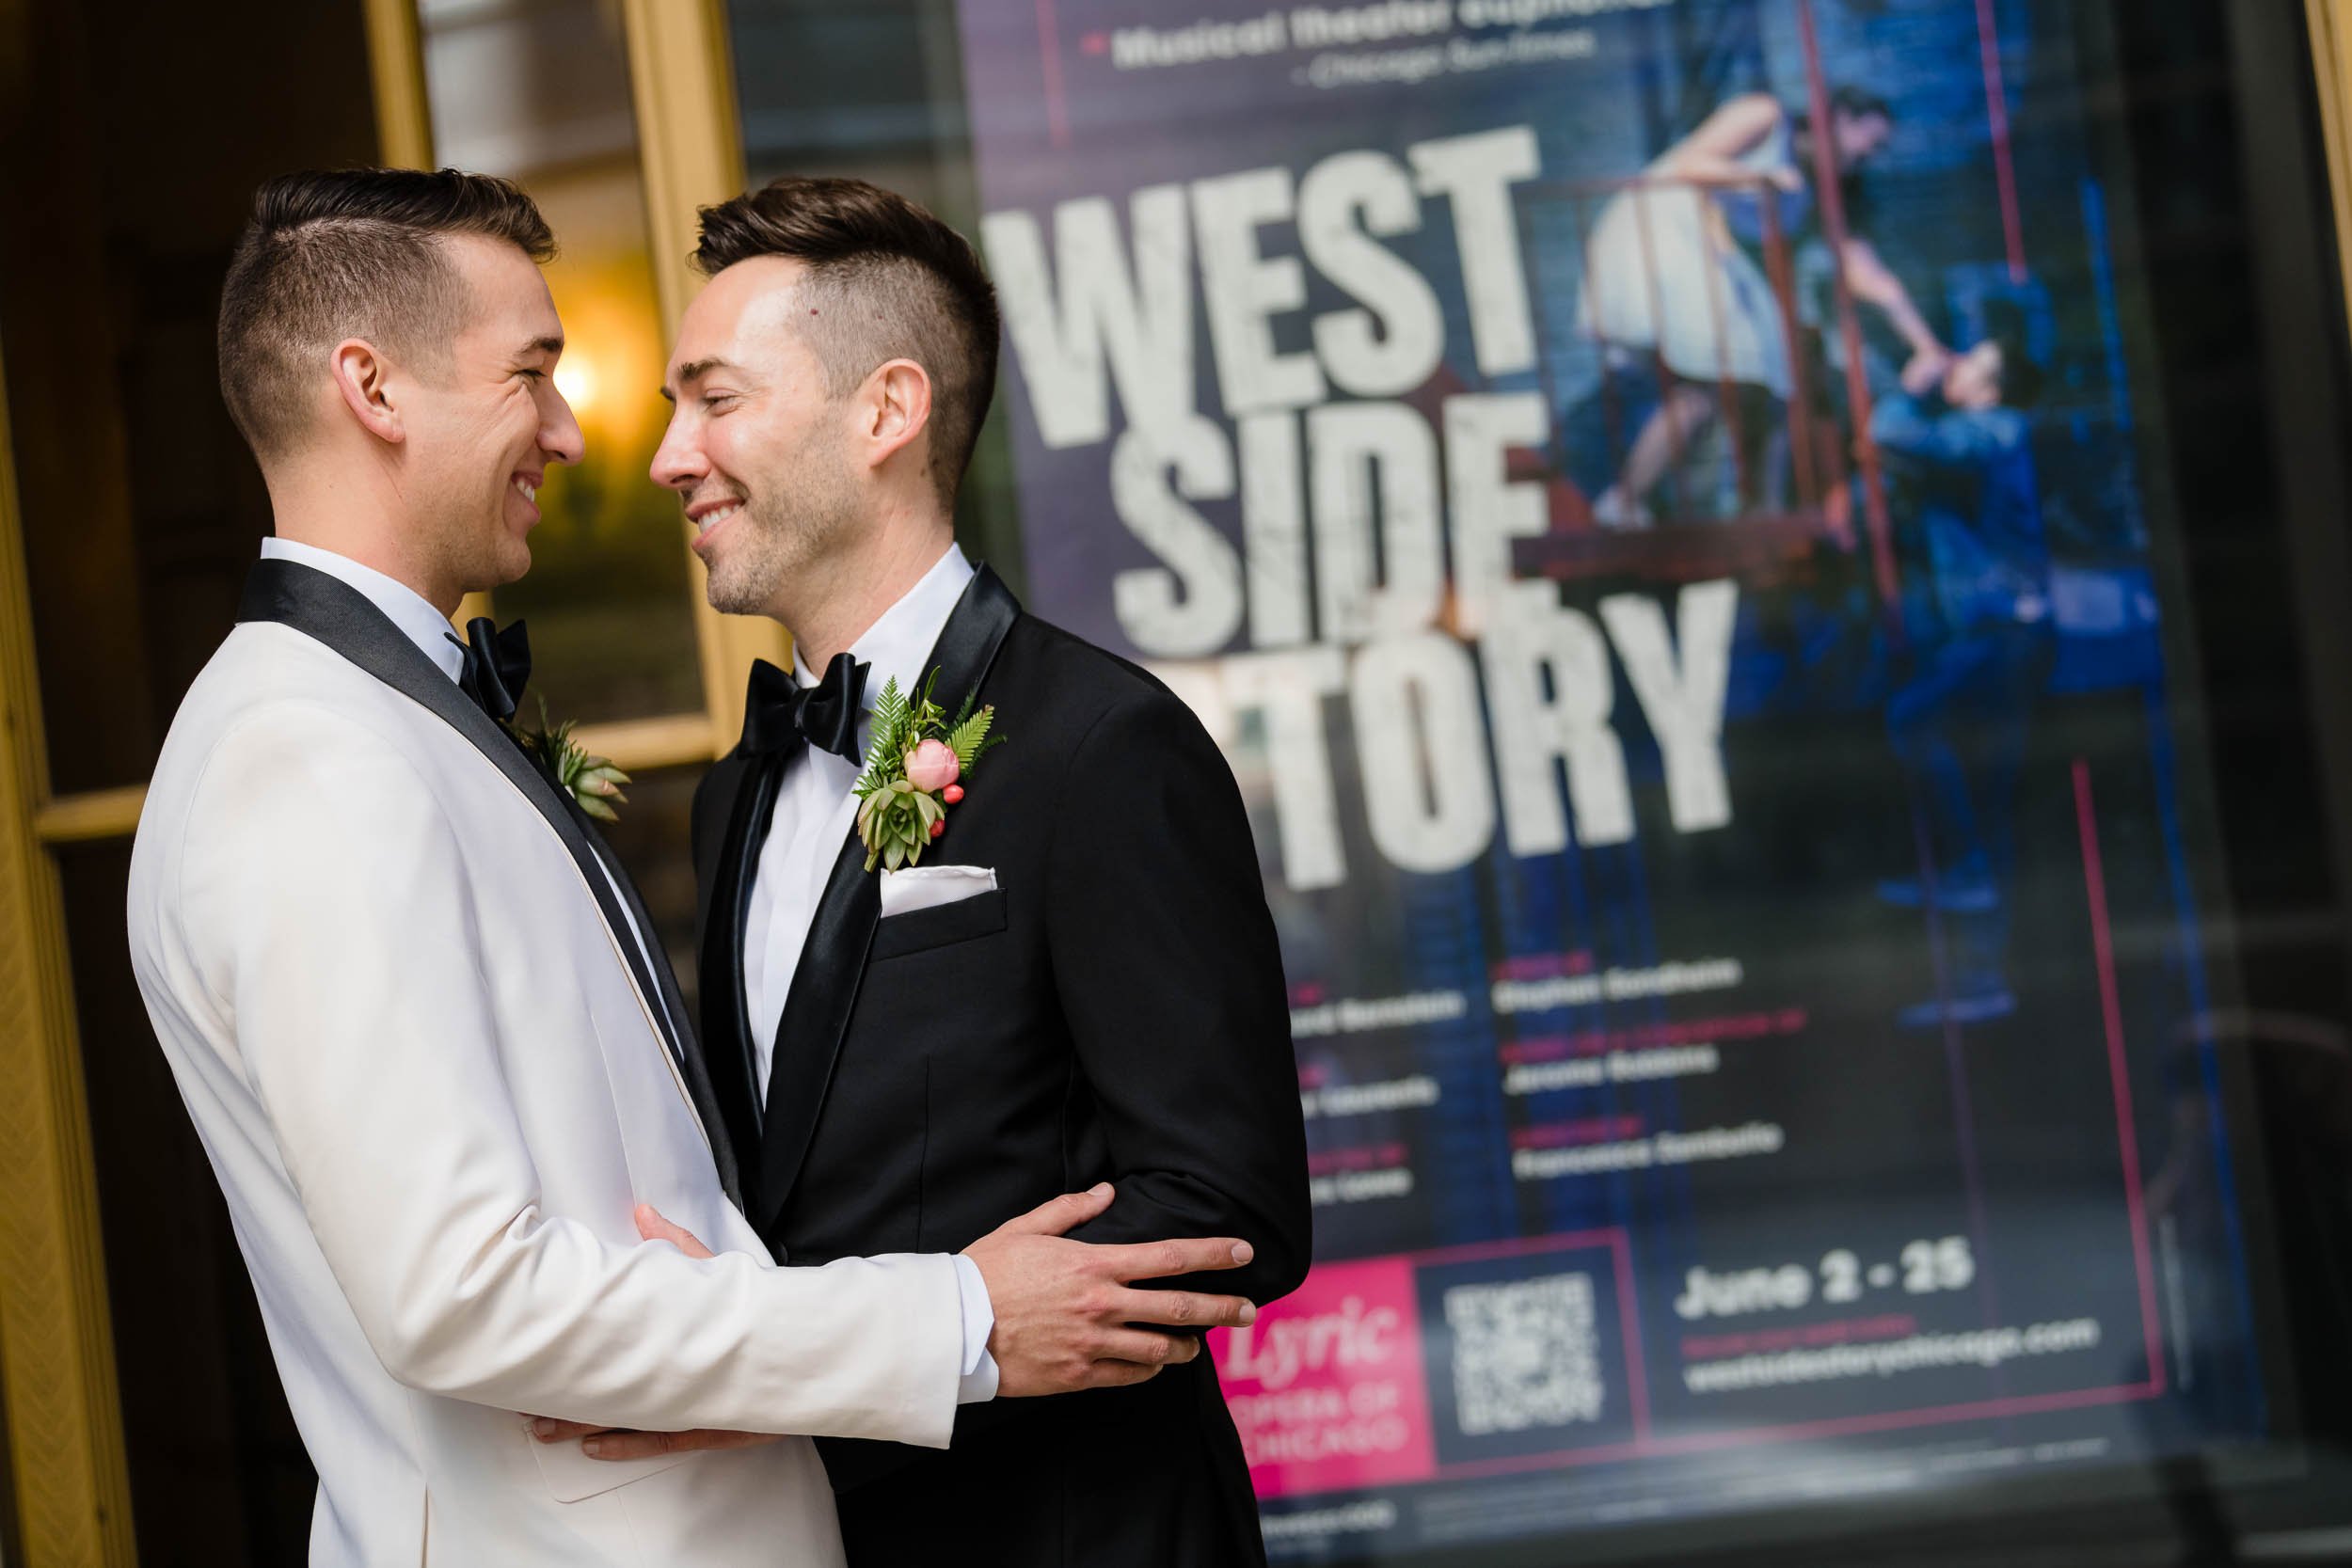 Lyric Opera | same sex wedding photo | Chicago IL